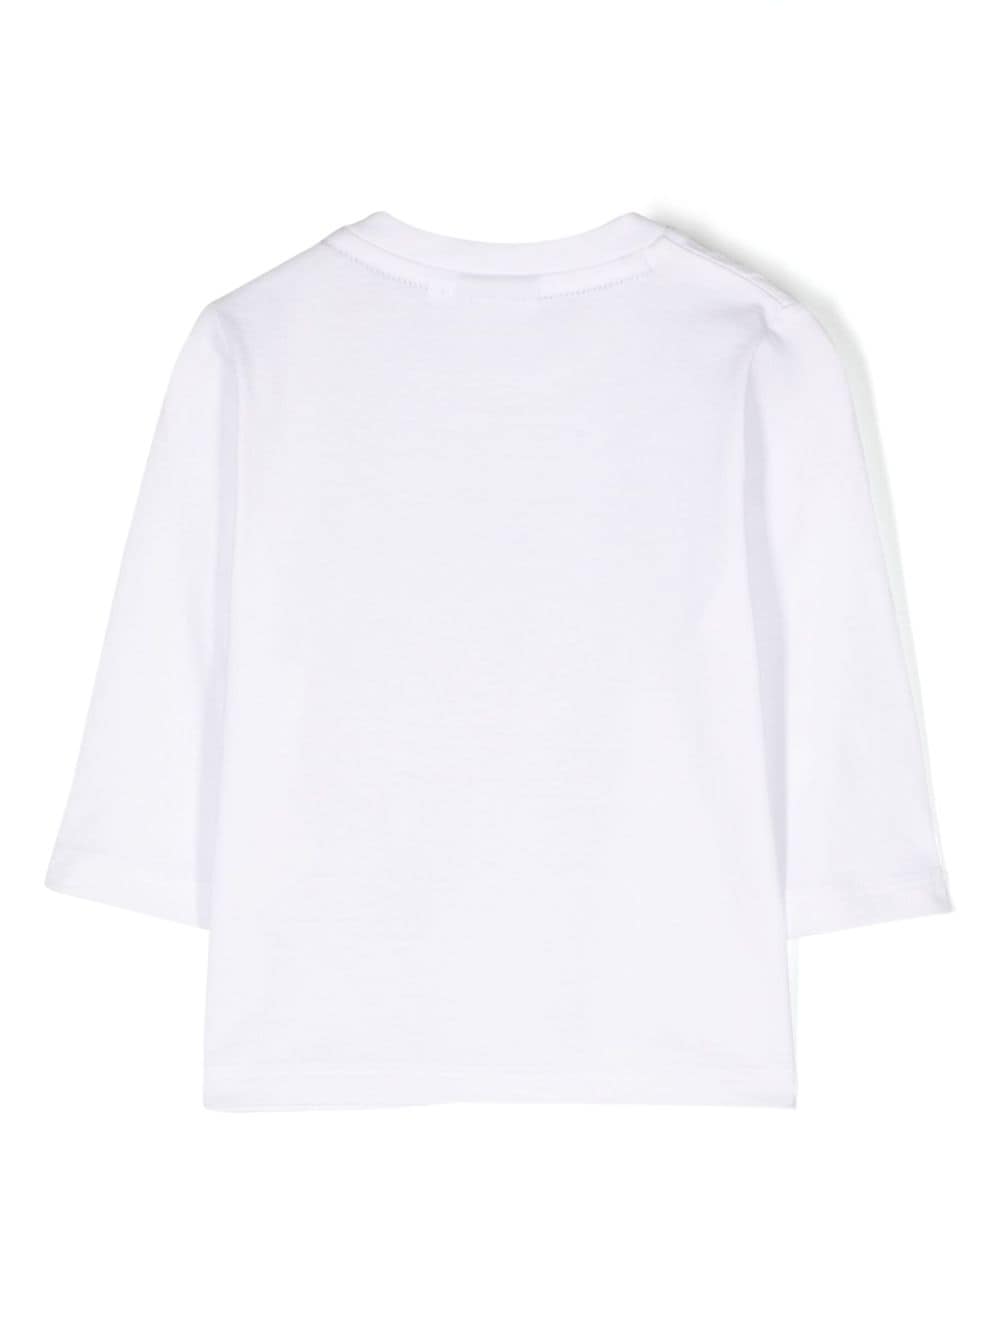 White cotton jersey baby boy HUGO BOSS t-shirt | Carofiglio Junior